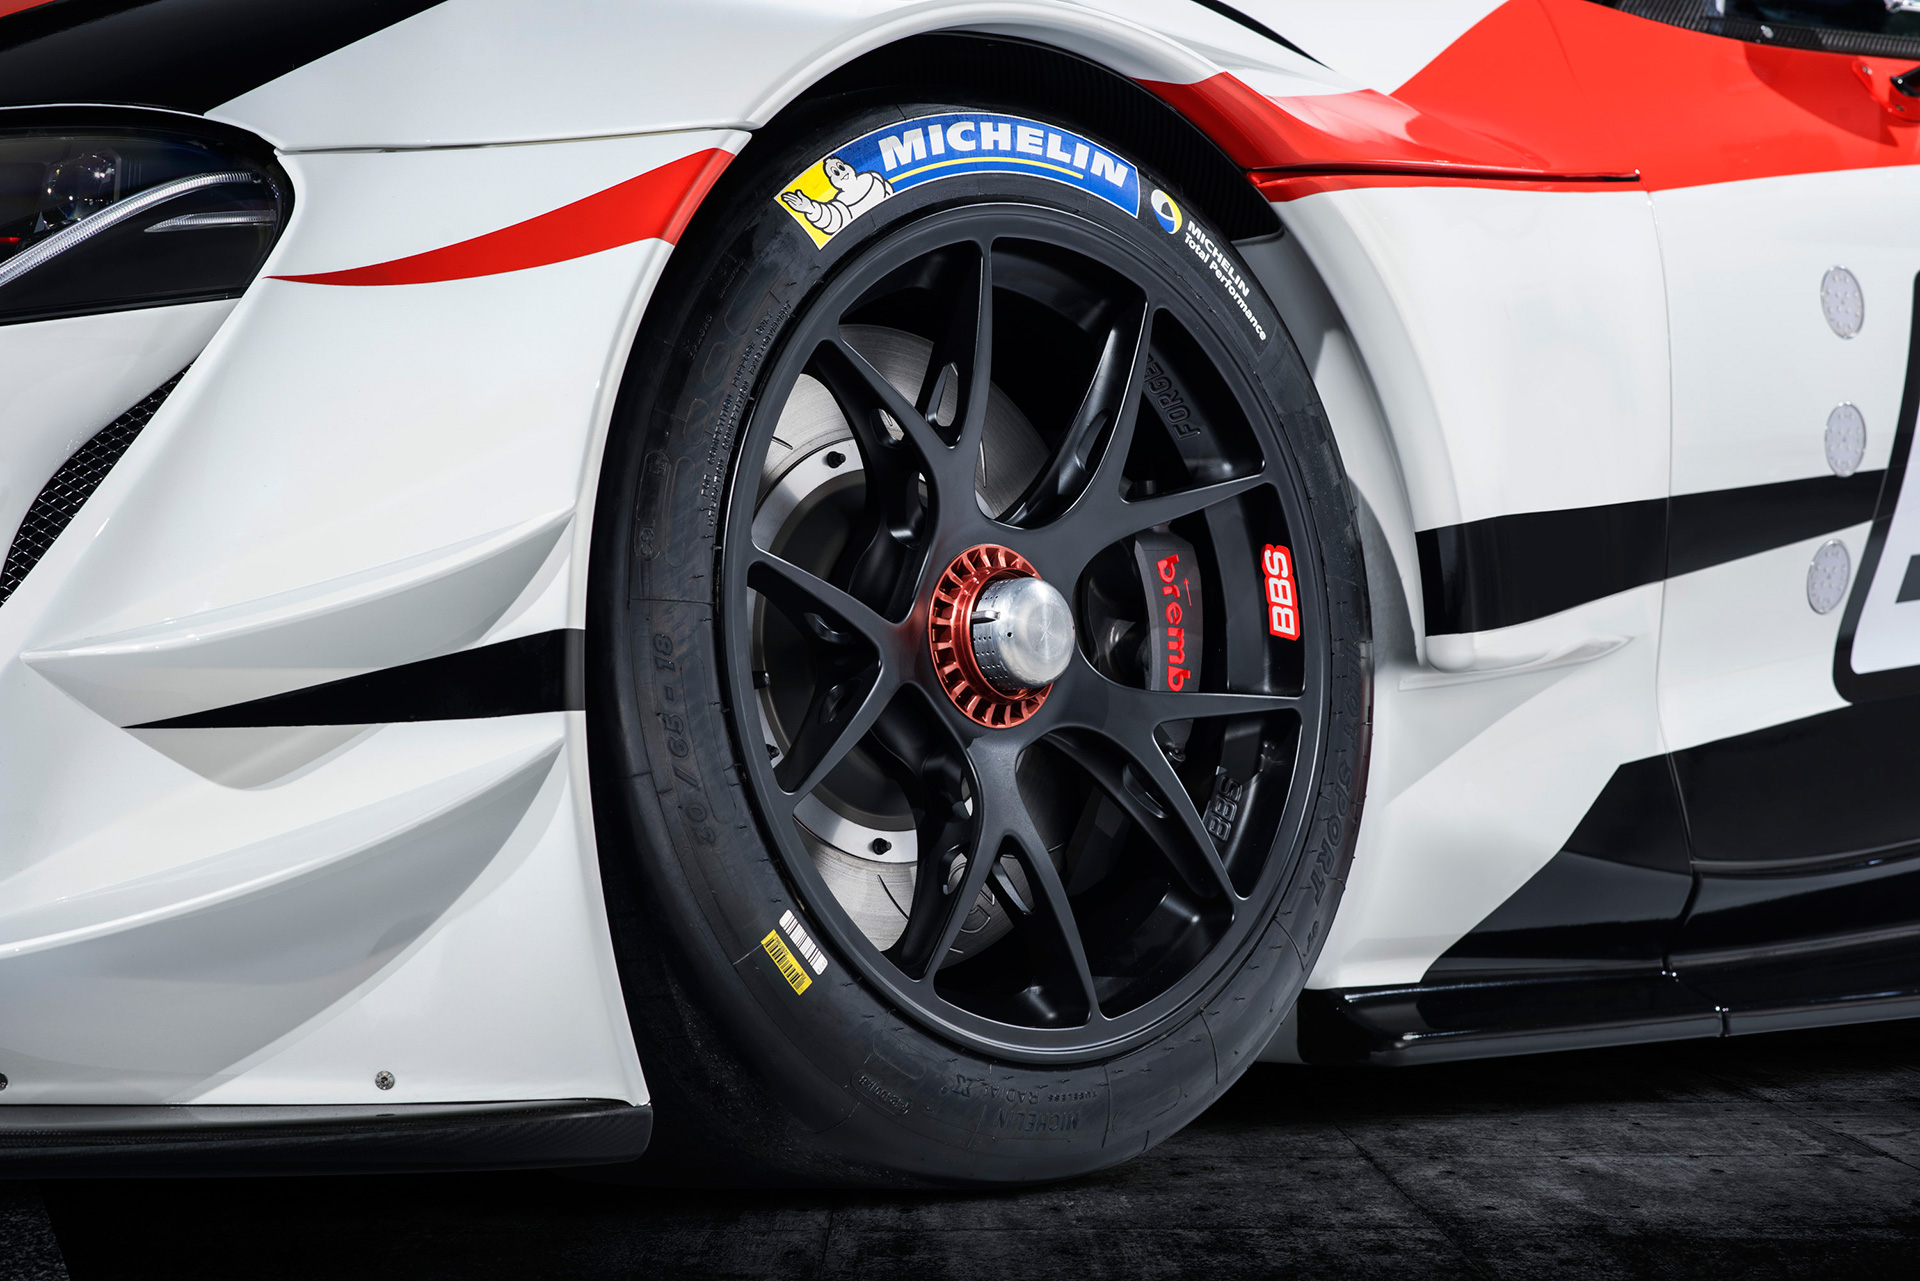 GR Supra Racing Concept | トヨタ自動車株式会社 公式企業サイト